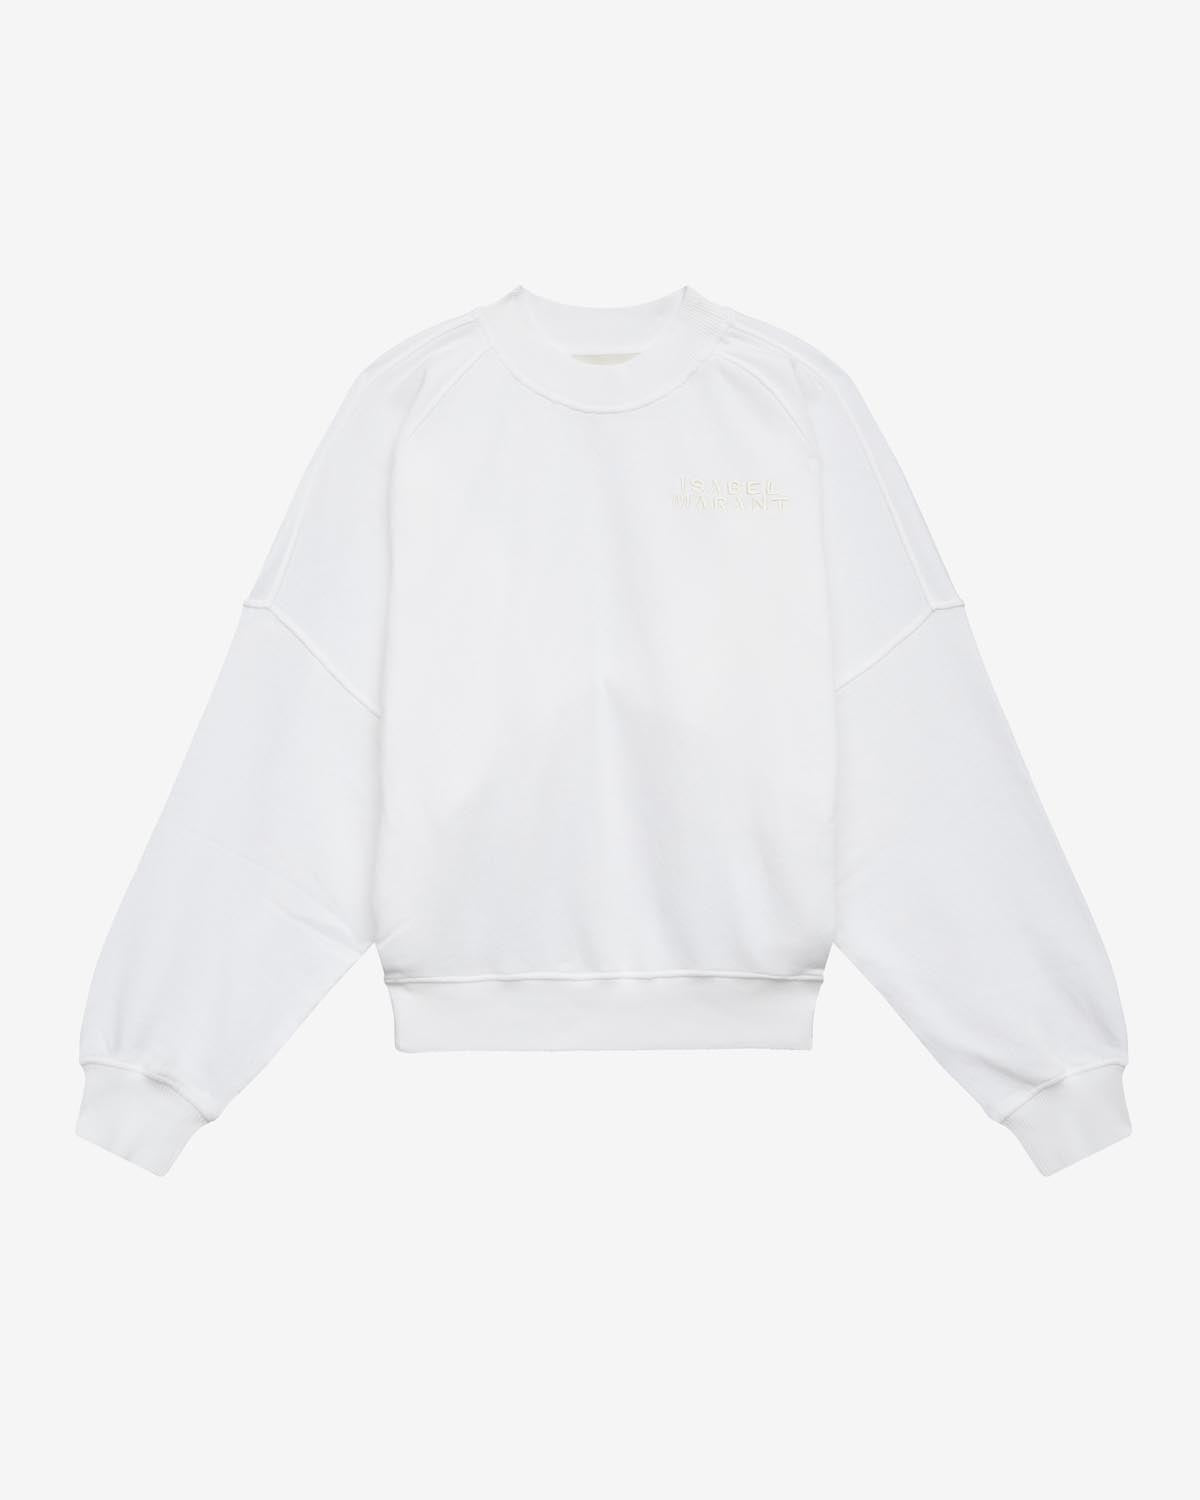 Shanice sweatshirt Woman Bianco 2